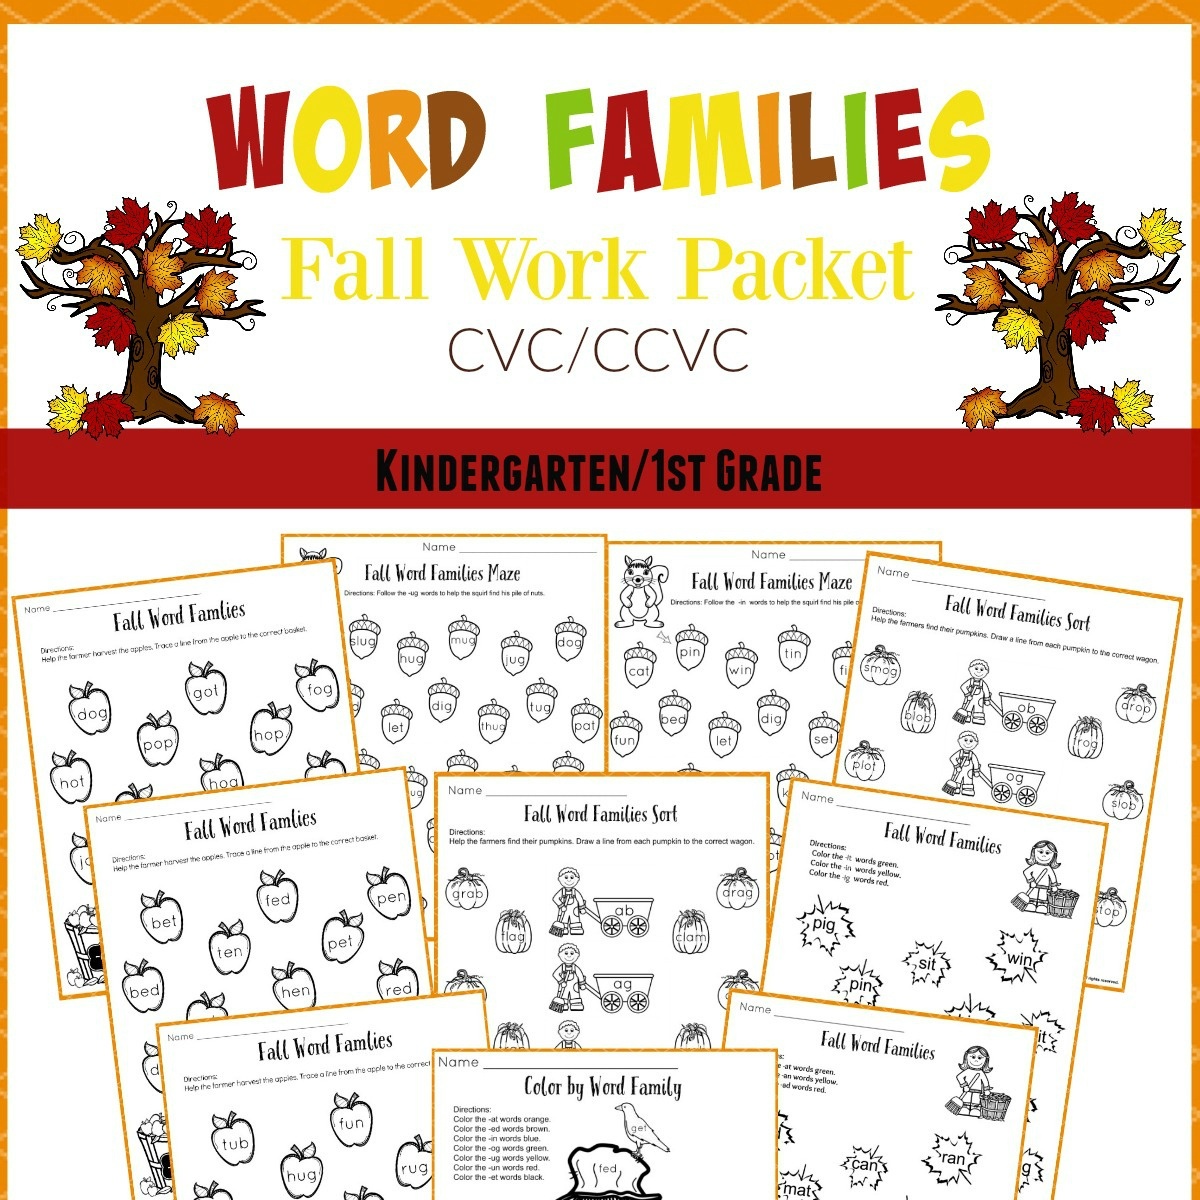 Fall Word Families Worksheets For Kindergarten Or 1St Grade - Free Printable Word Family Worksheets For Kindergarten